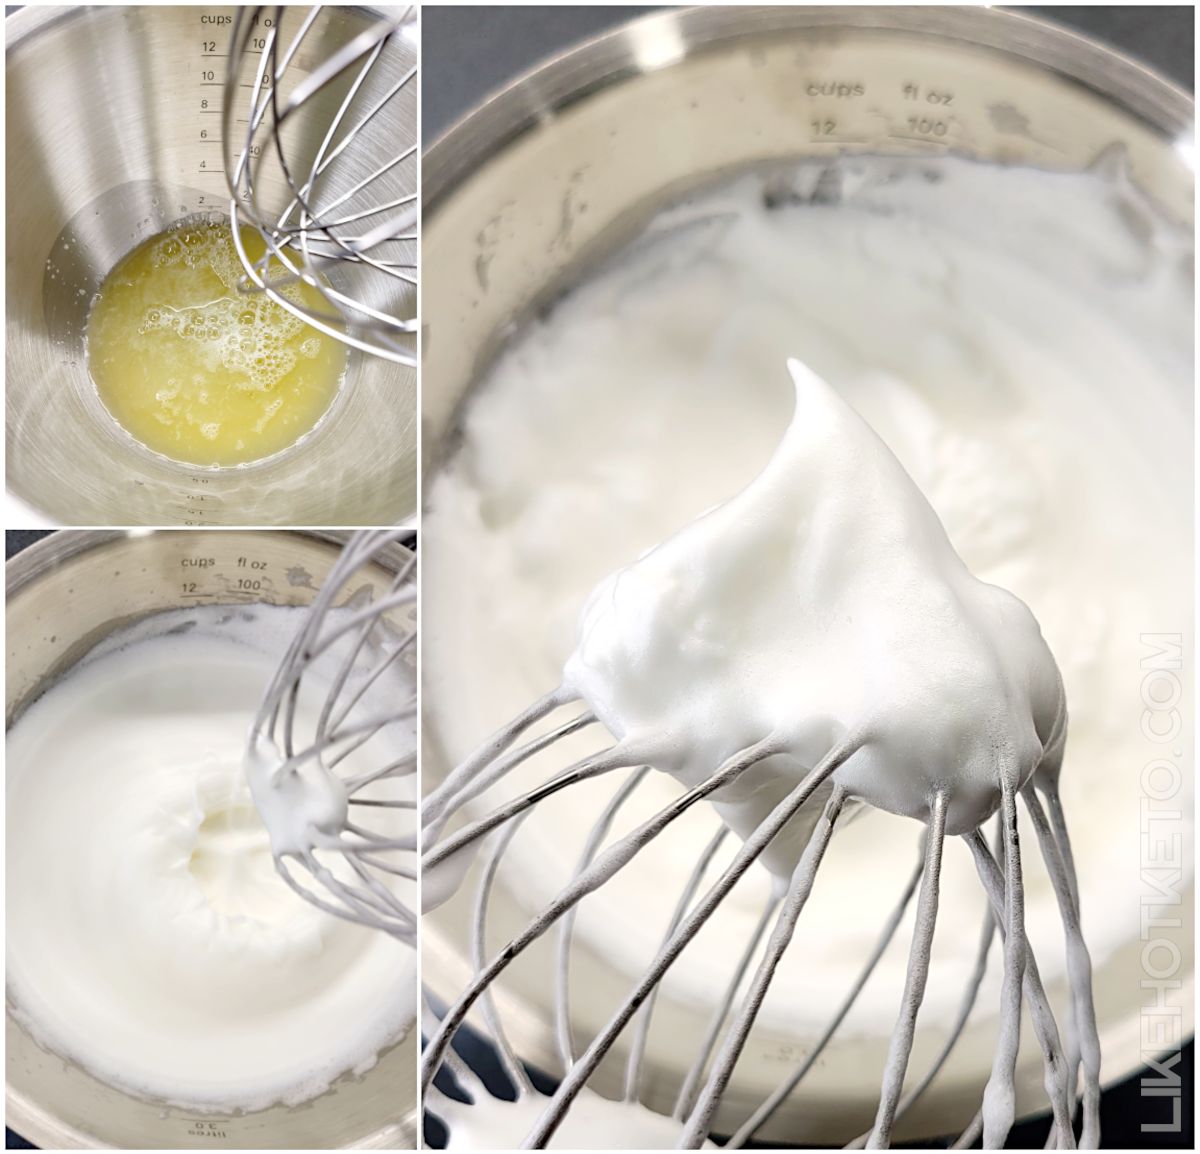 How egg whites beaten to stiff peaks look like.